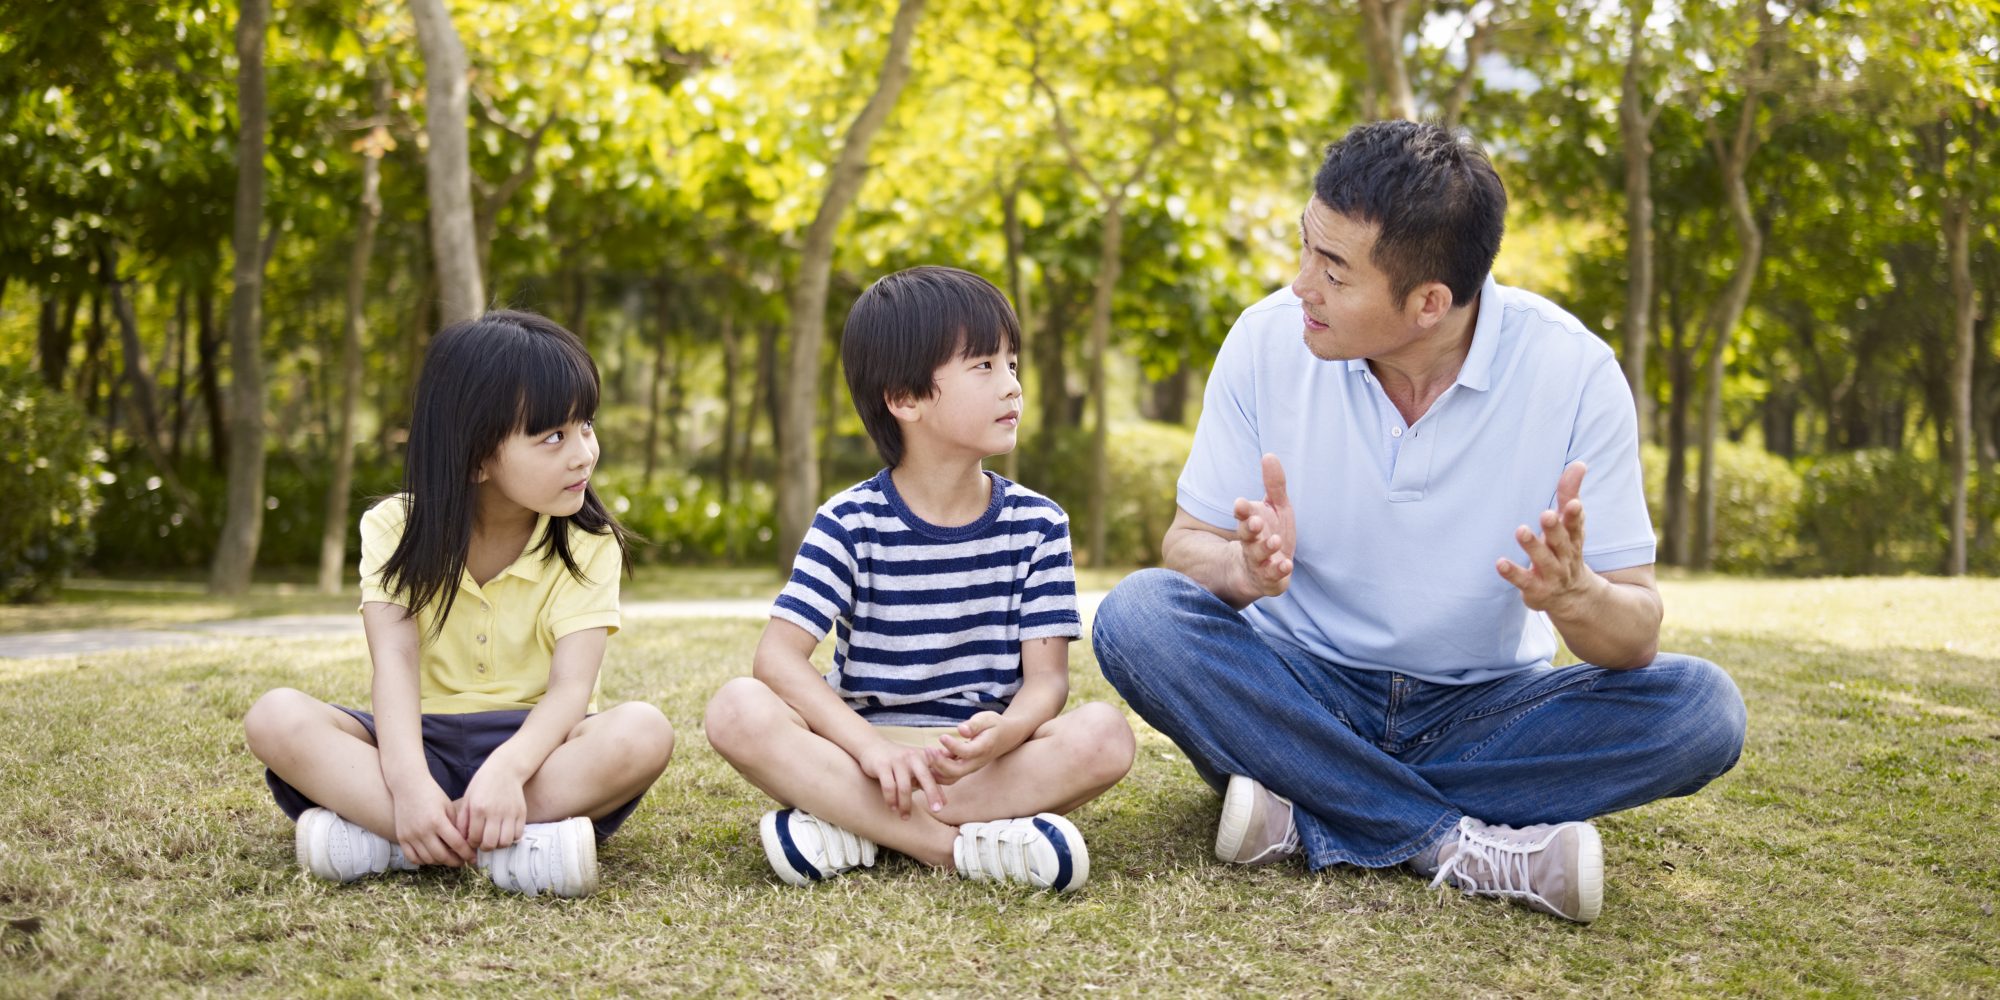 Children with speech and language communication needs